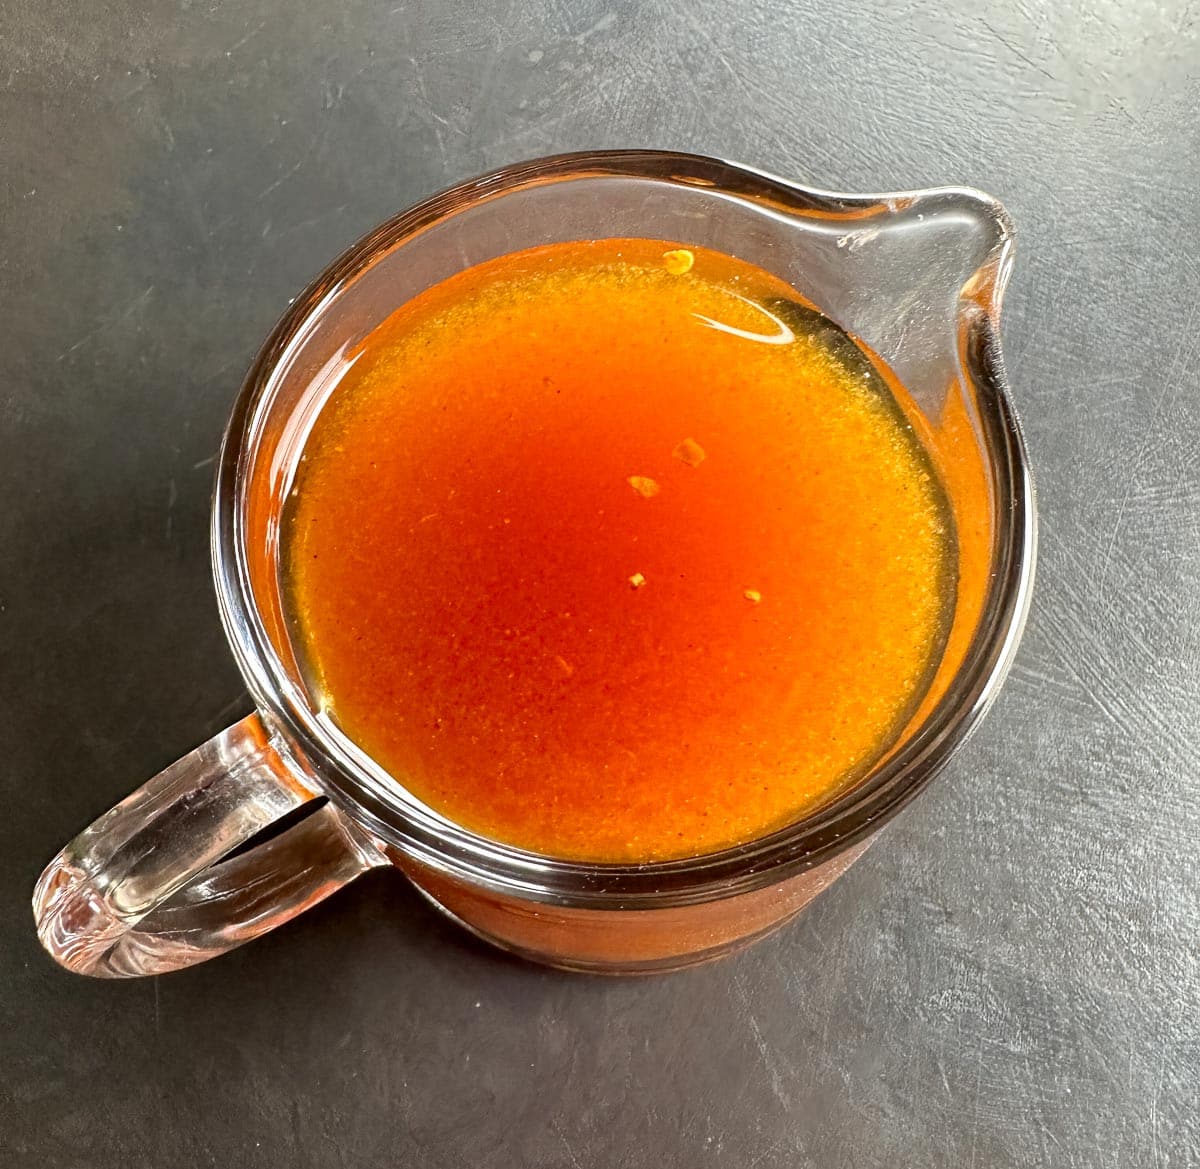 Low FODMAP Vinegar BBQ Sauce in a glass pitcher; top view.